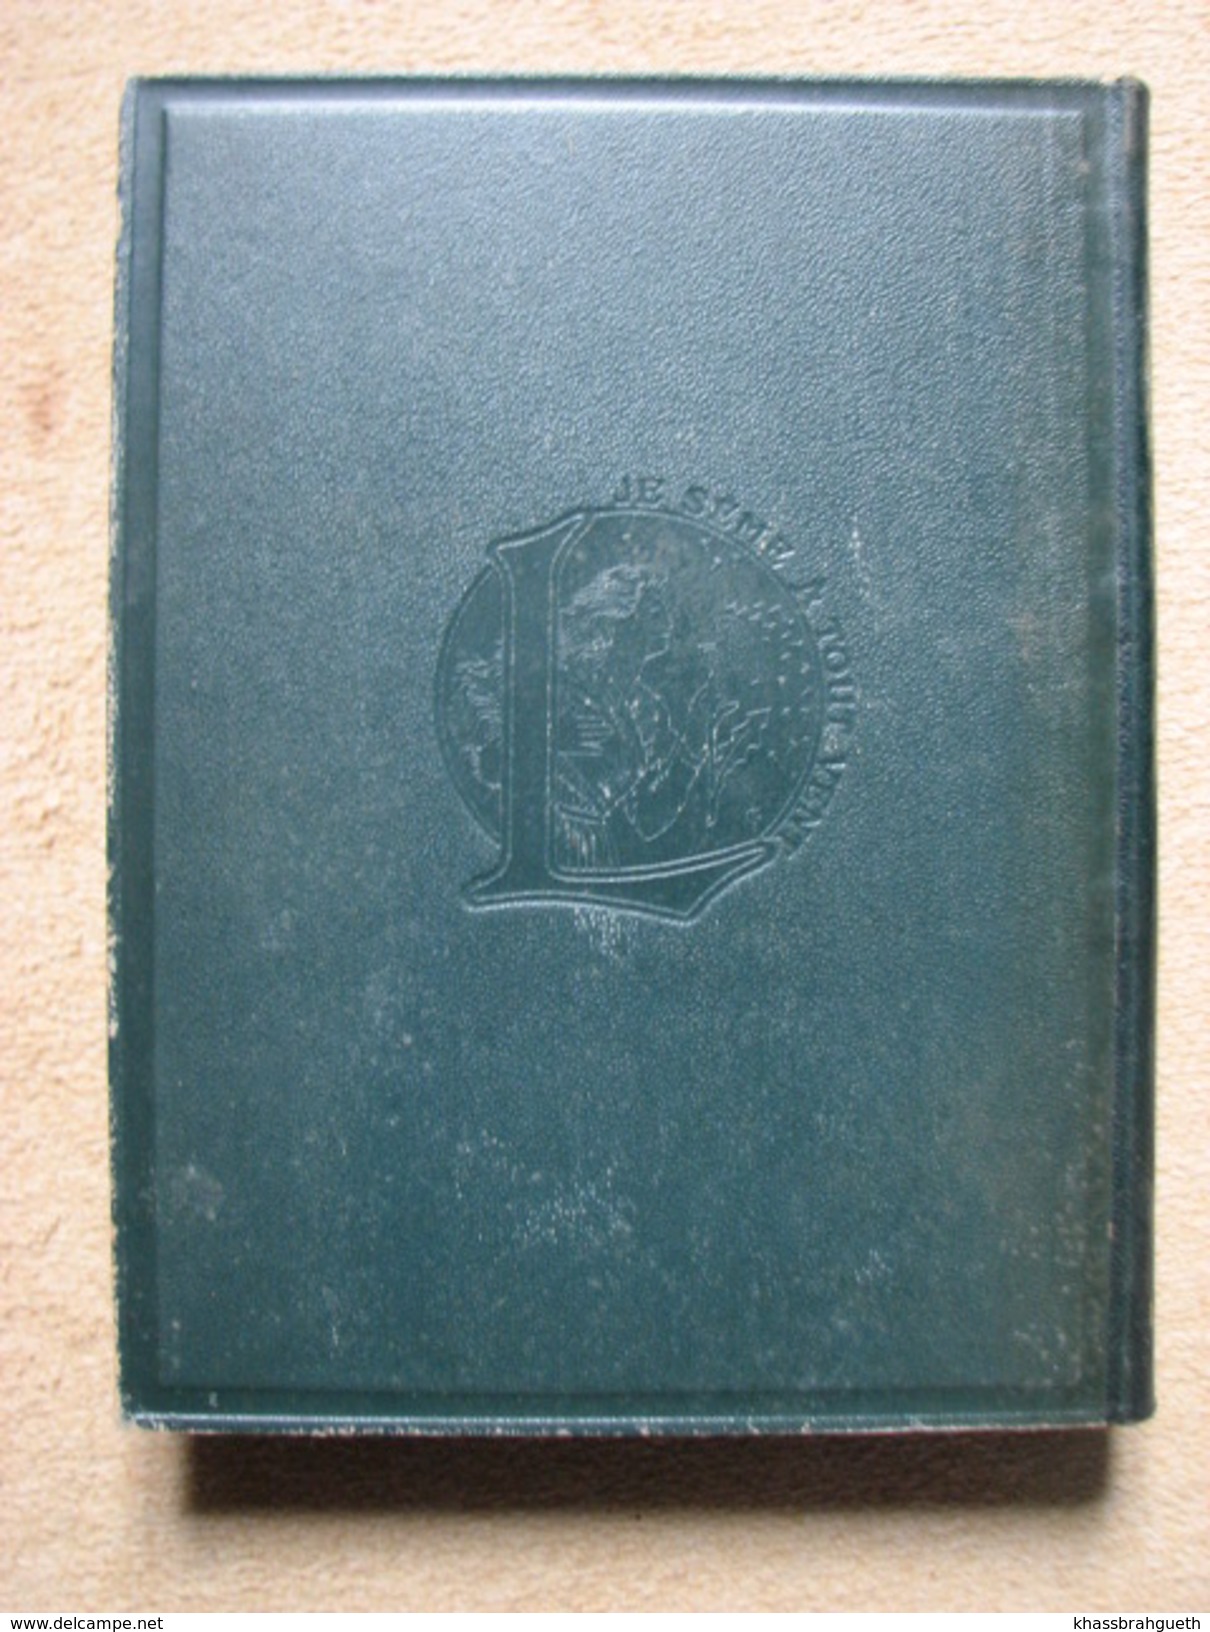 FELIX GUIRAND - MYTHOLOGIE GENERALE - LAROUSSE (COPYRIGHT 1935) - Encyclopedieën